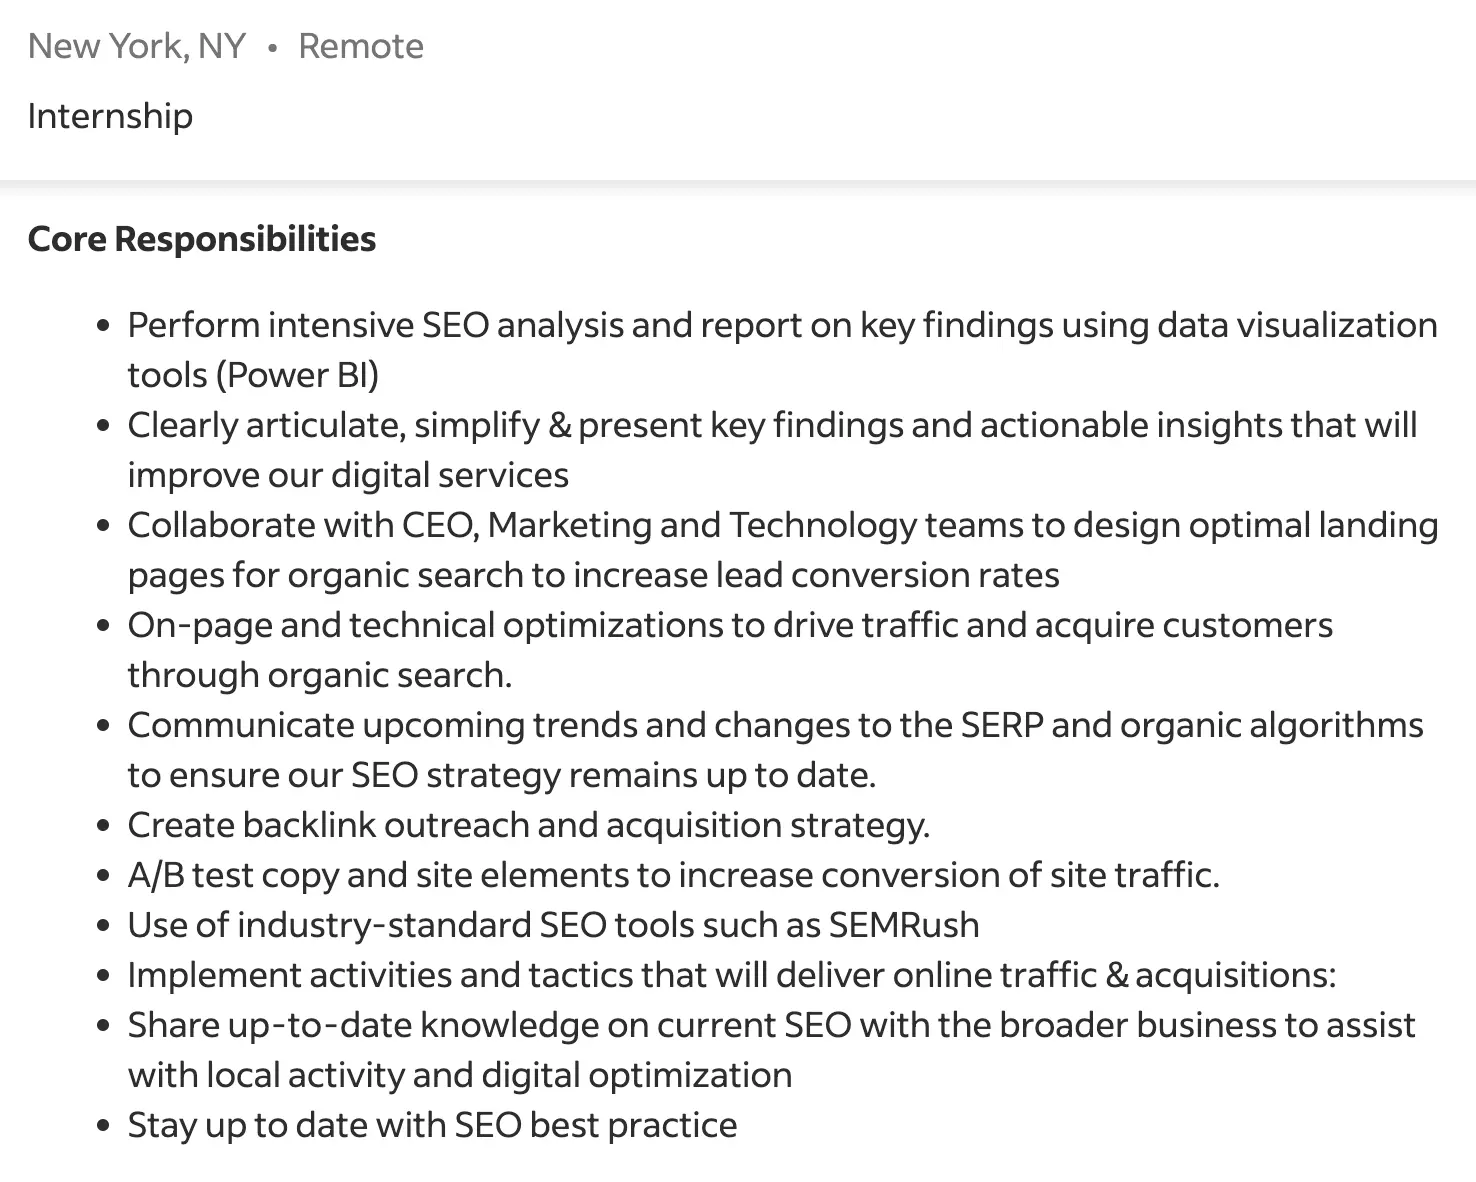 Example of Digital Marketing Intern Job Requirements